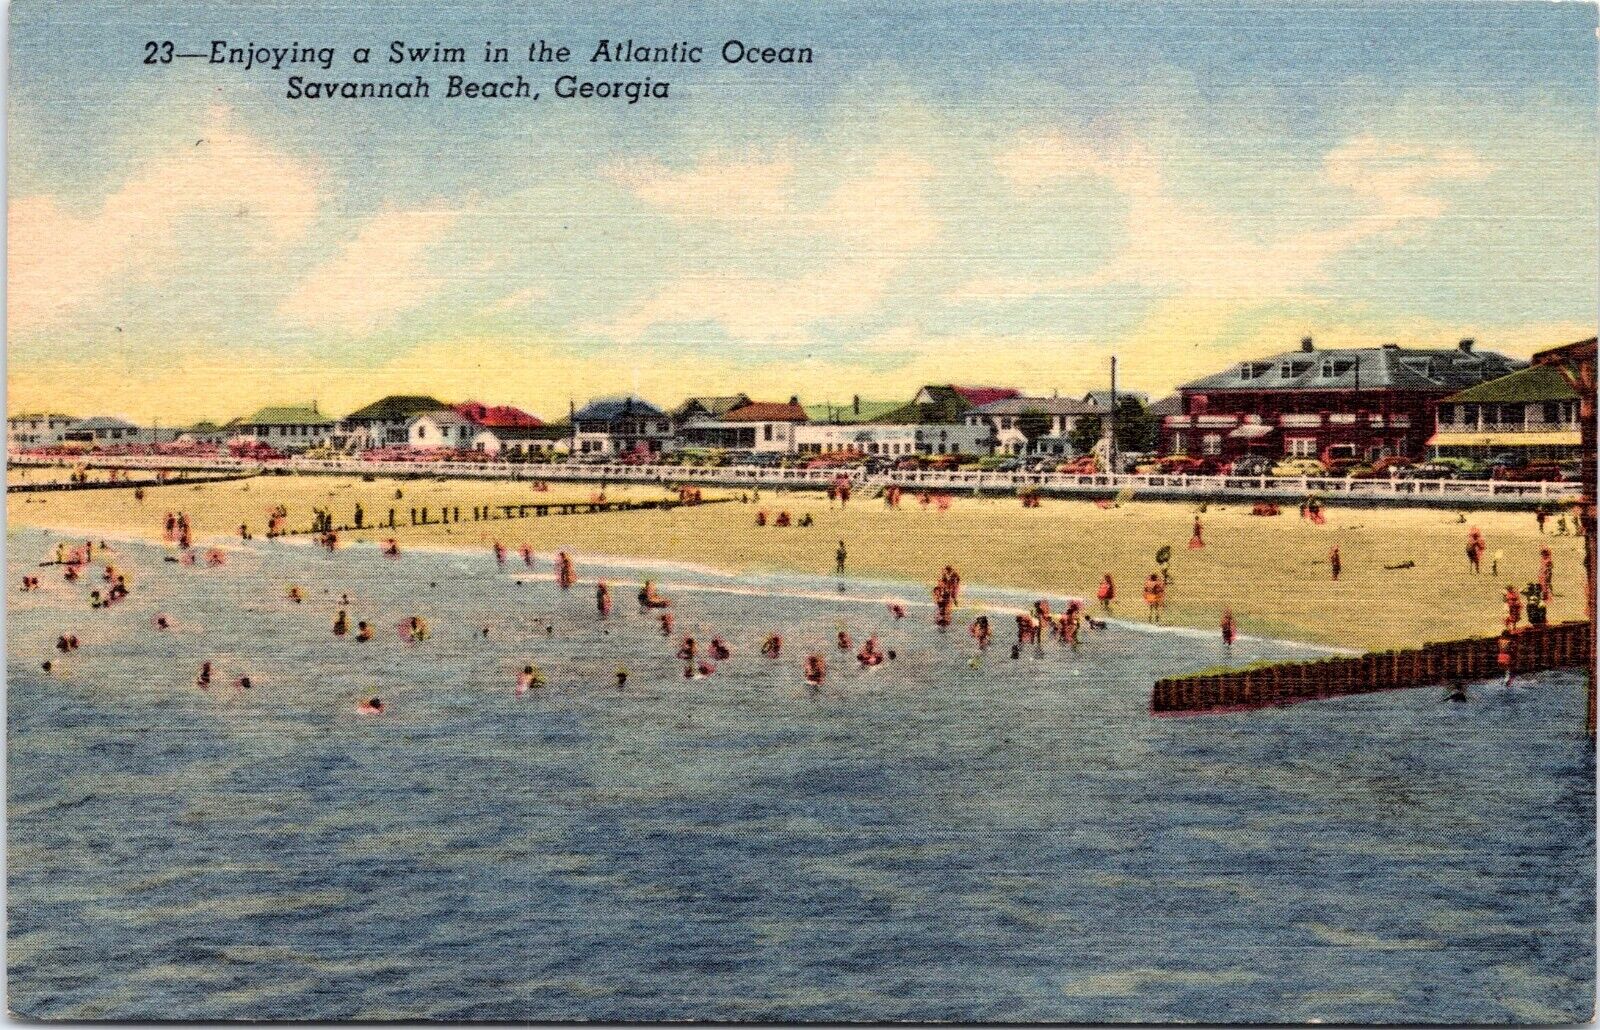 Swimmers in Atlantic Ocean, Savannah Beach, Georgia - 1952 Linen Postcard